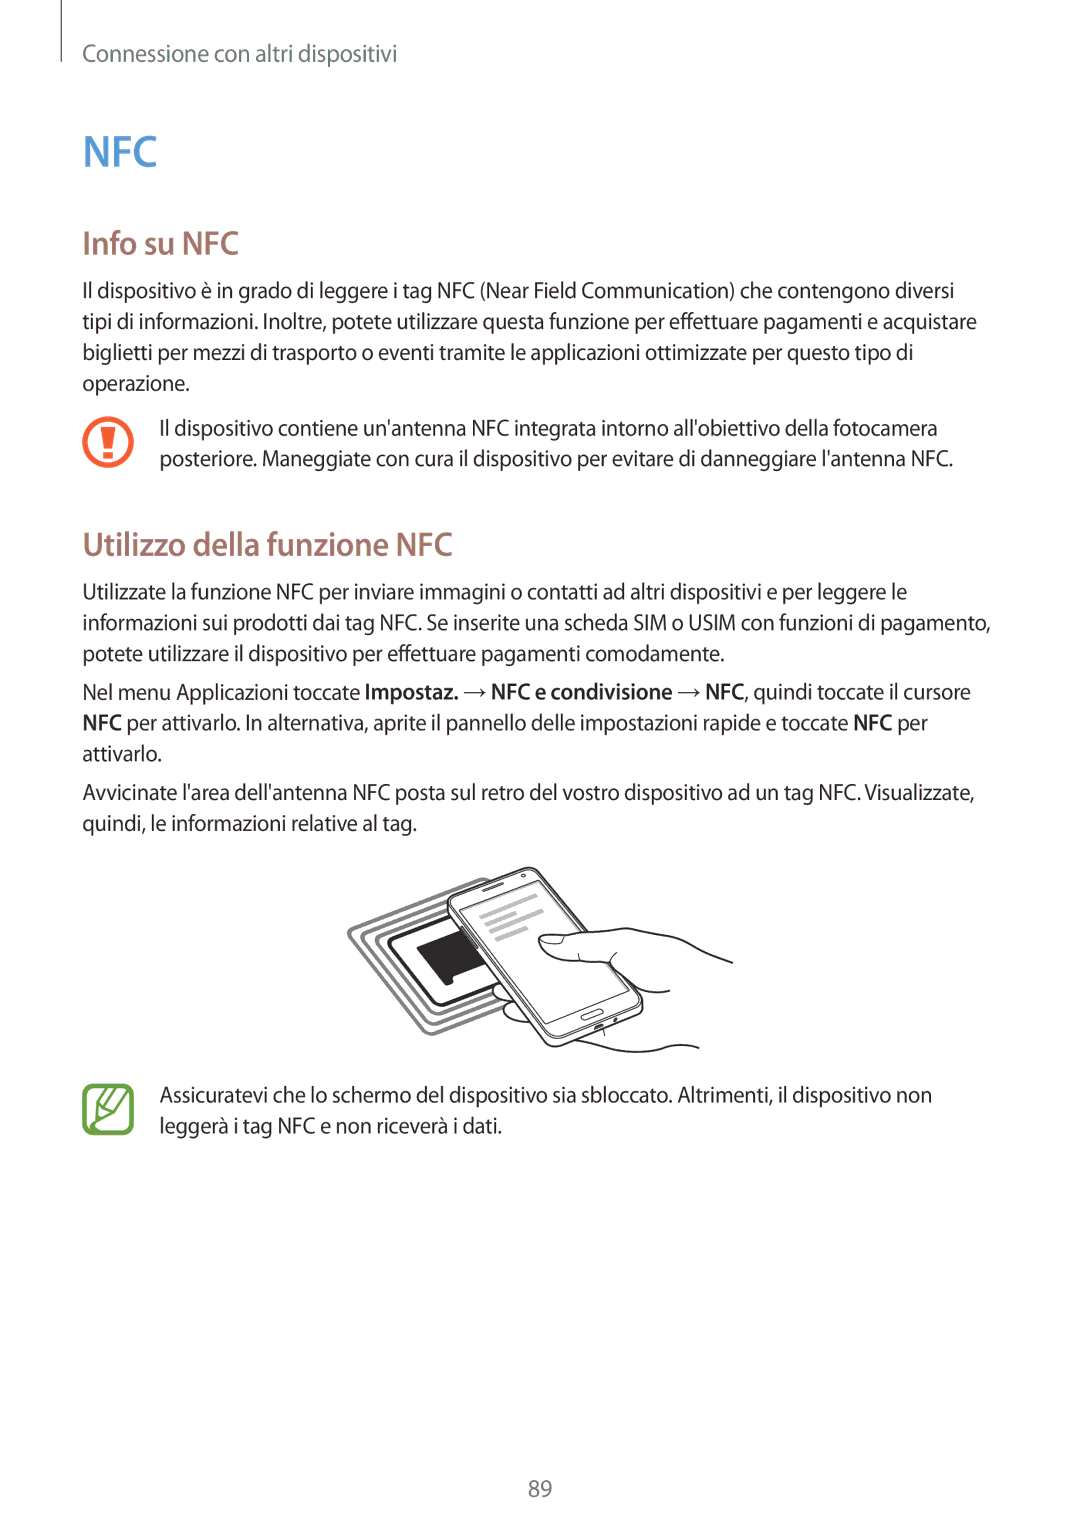 Samsung SM-A300FZWUITV, SM-A300FZDUXEO, SM-A300FZWUDBT, SM-A300FZKUDBT manual Info su NFC, Utilizzo della funzione NFC 